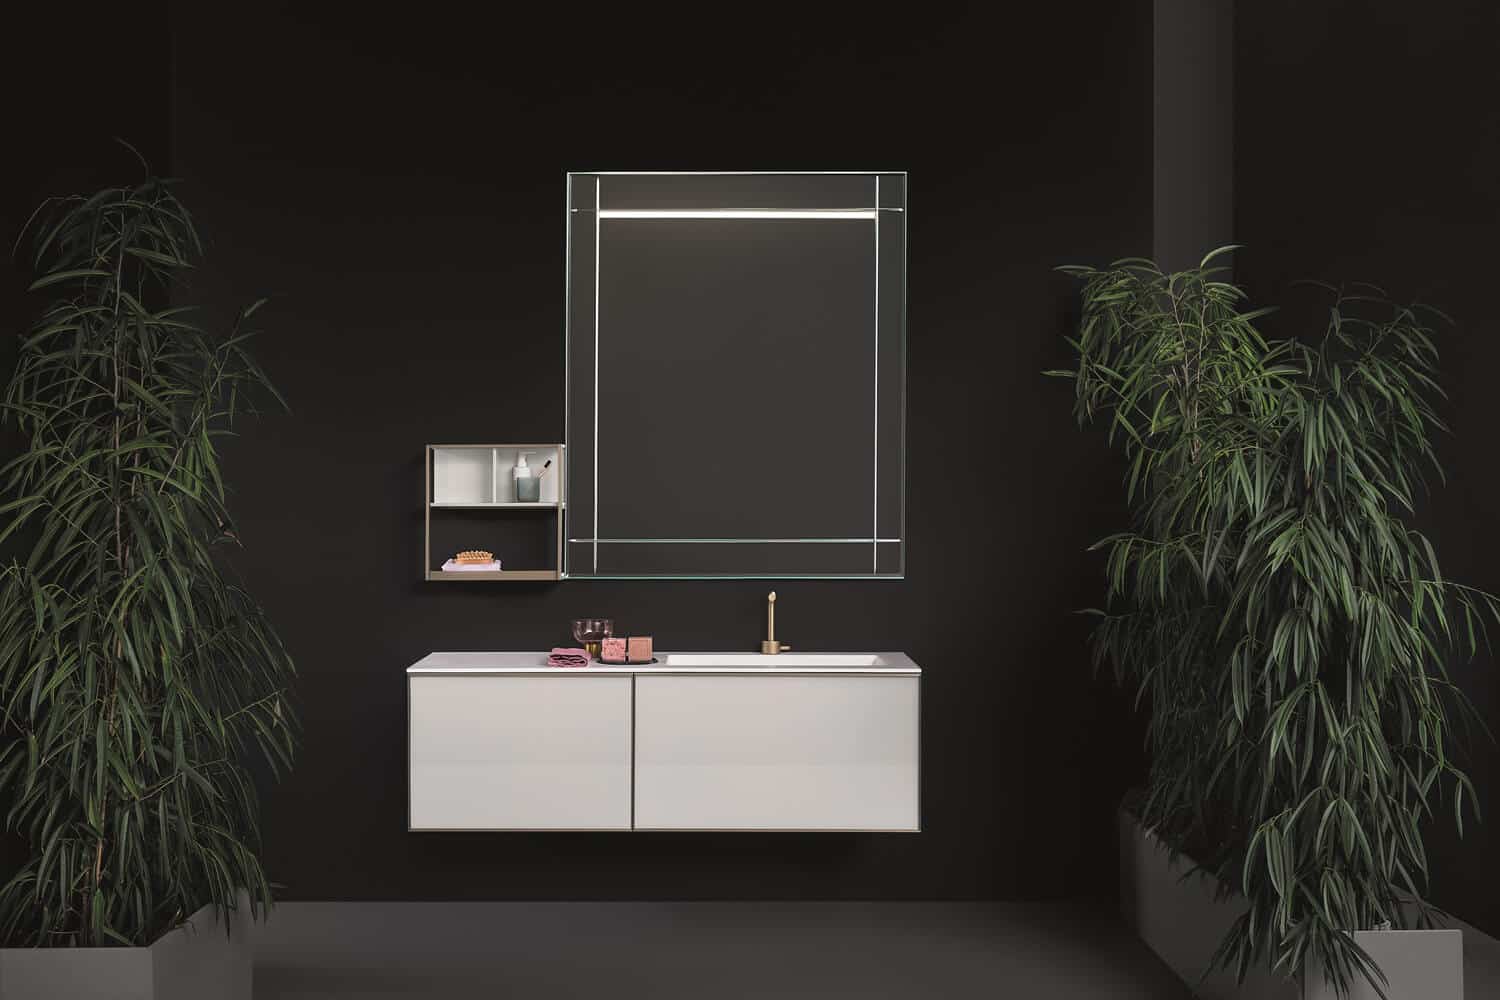 Quari also lends itself to very minimalist bathrooms.